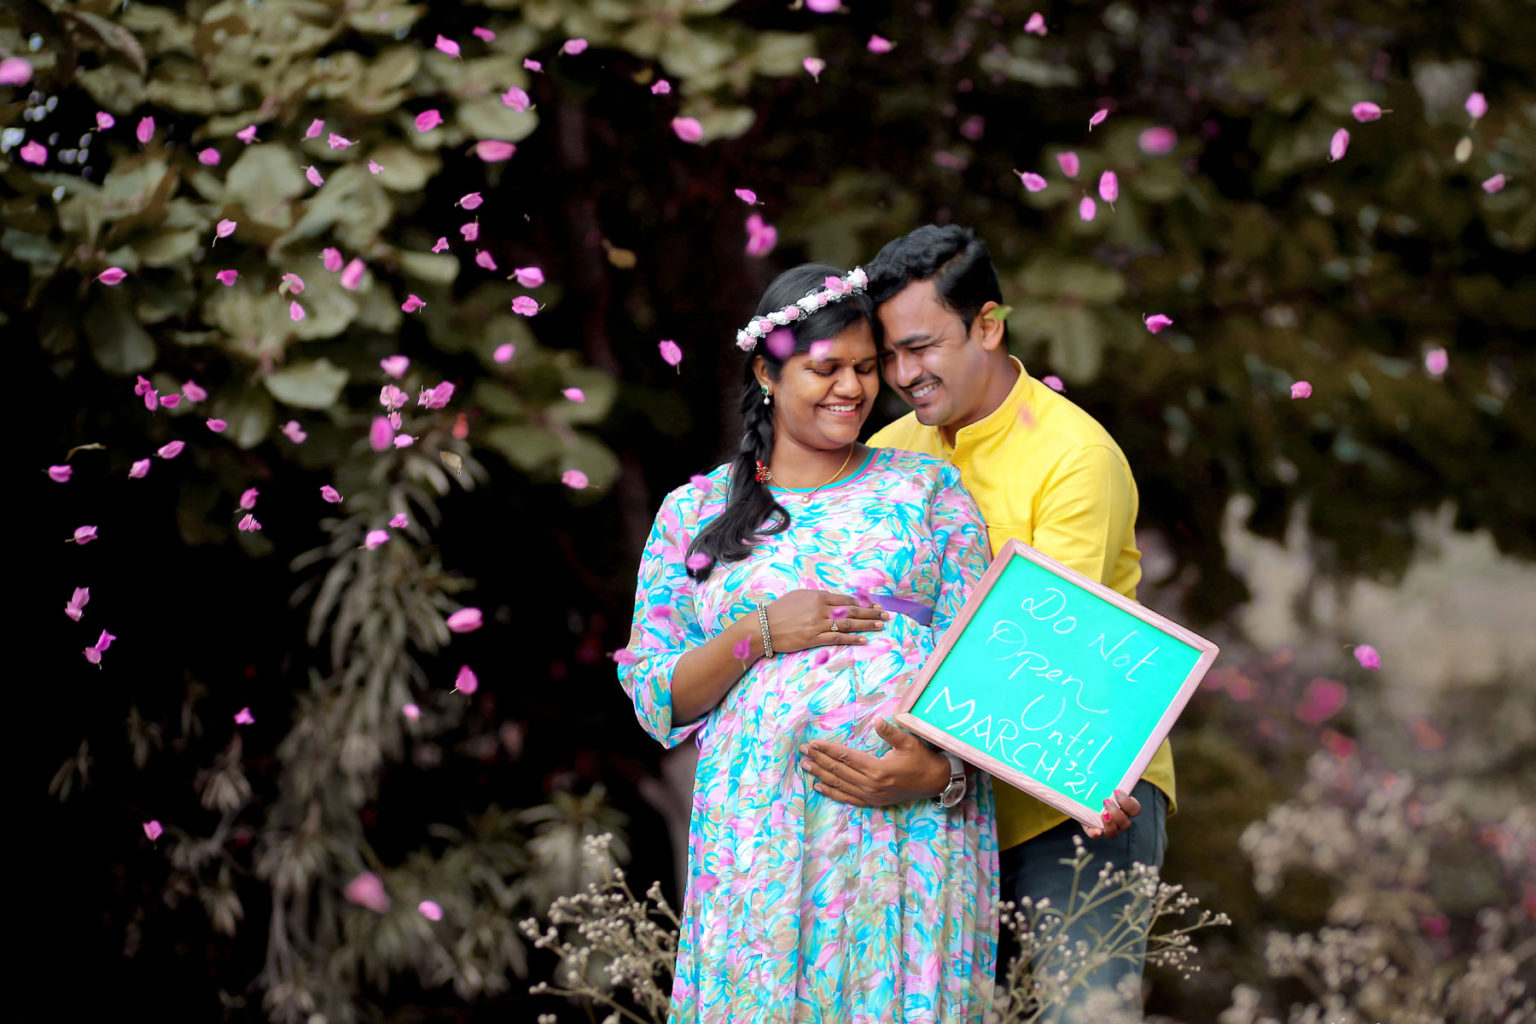 Maternity photo shoot in Pune | Pregnancy Portfolio | Edita Photography